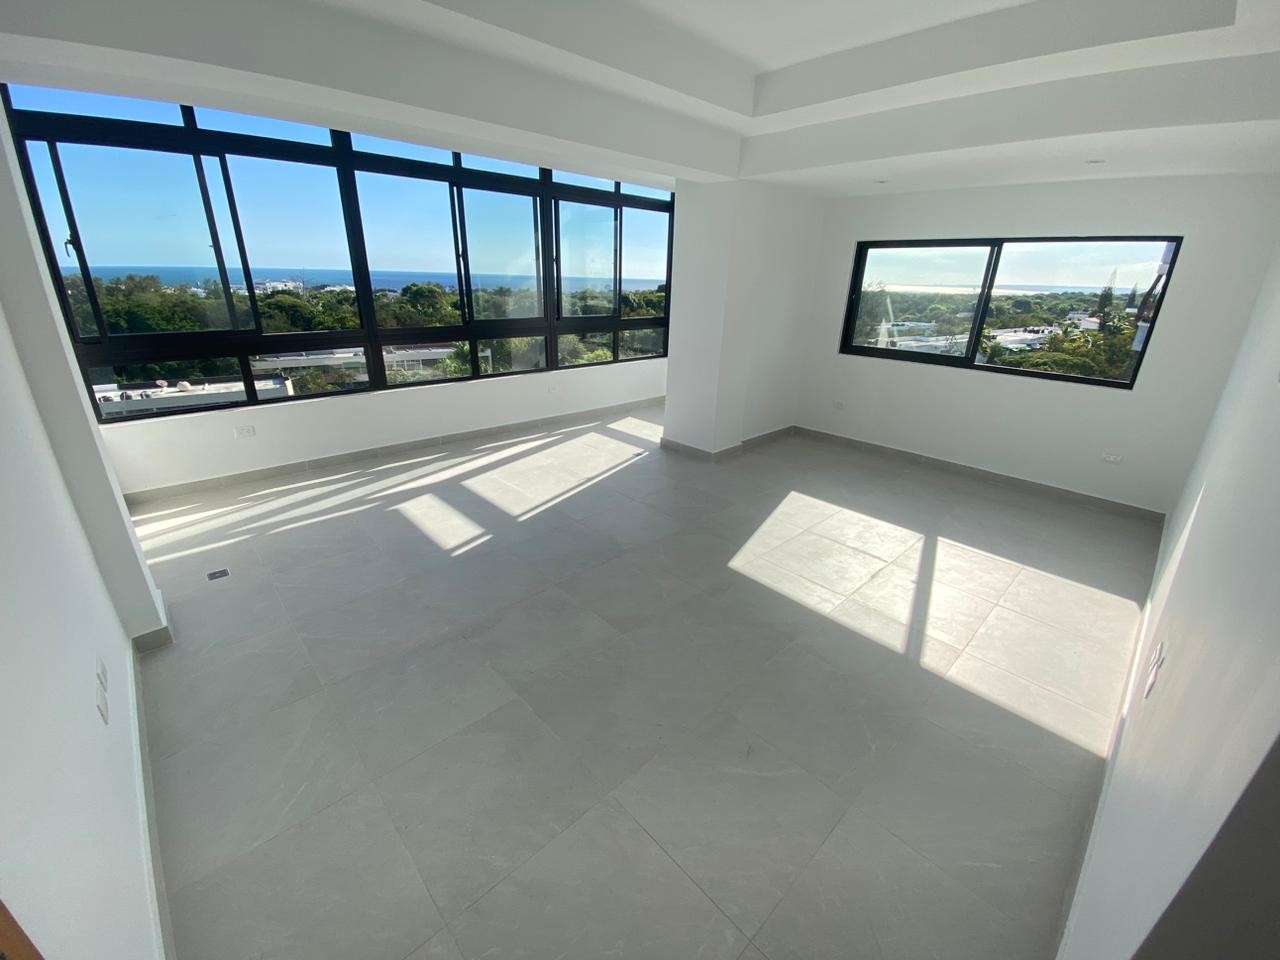 penthouses - Pent-house Nuevo en VentaMIRADOR SUR Mantenimiento: RD$12,000.